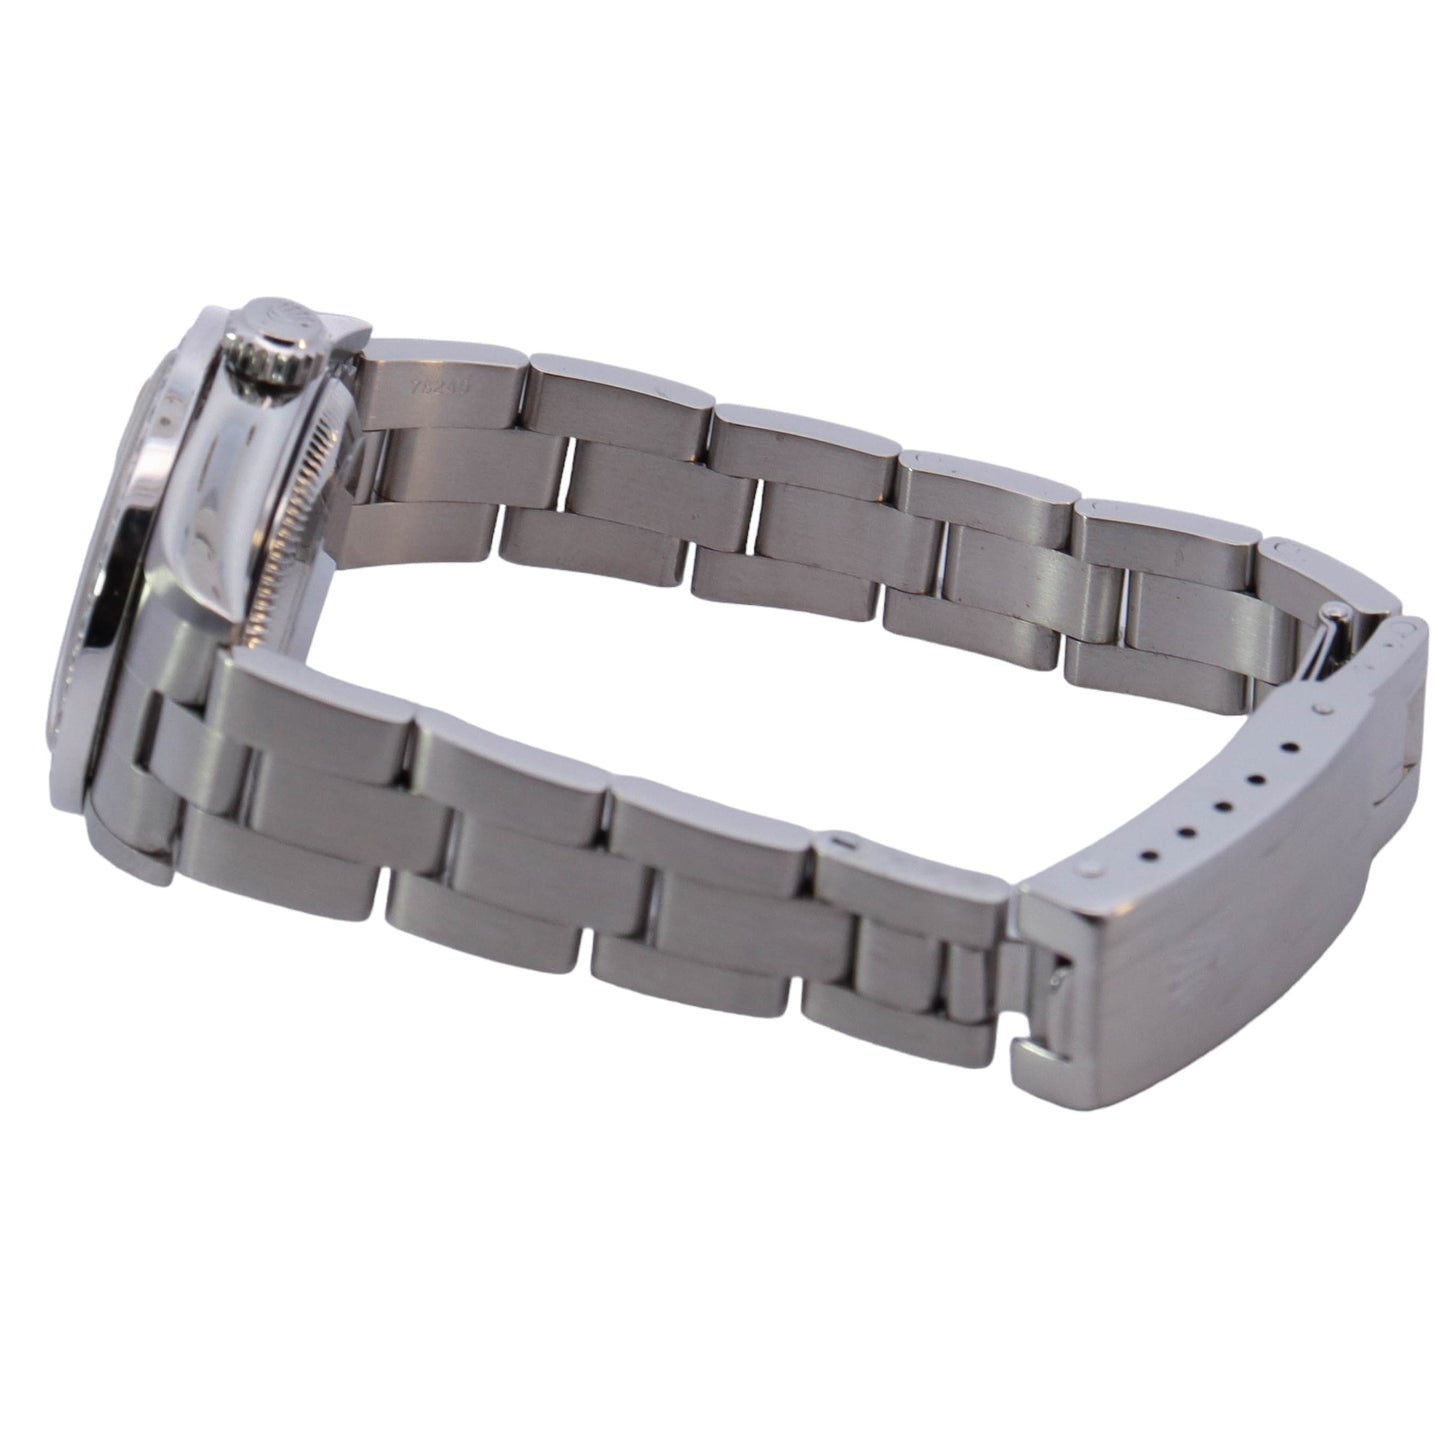 Rolex Datejust Stainless Steel 26mm Custom MOP Diamond Dial Watch Reference# 79160 - Happy Jewelers Fine Jewelry Lifetime Warranty